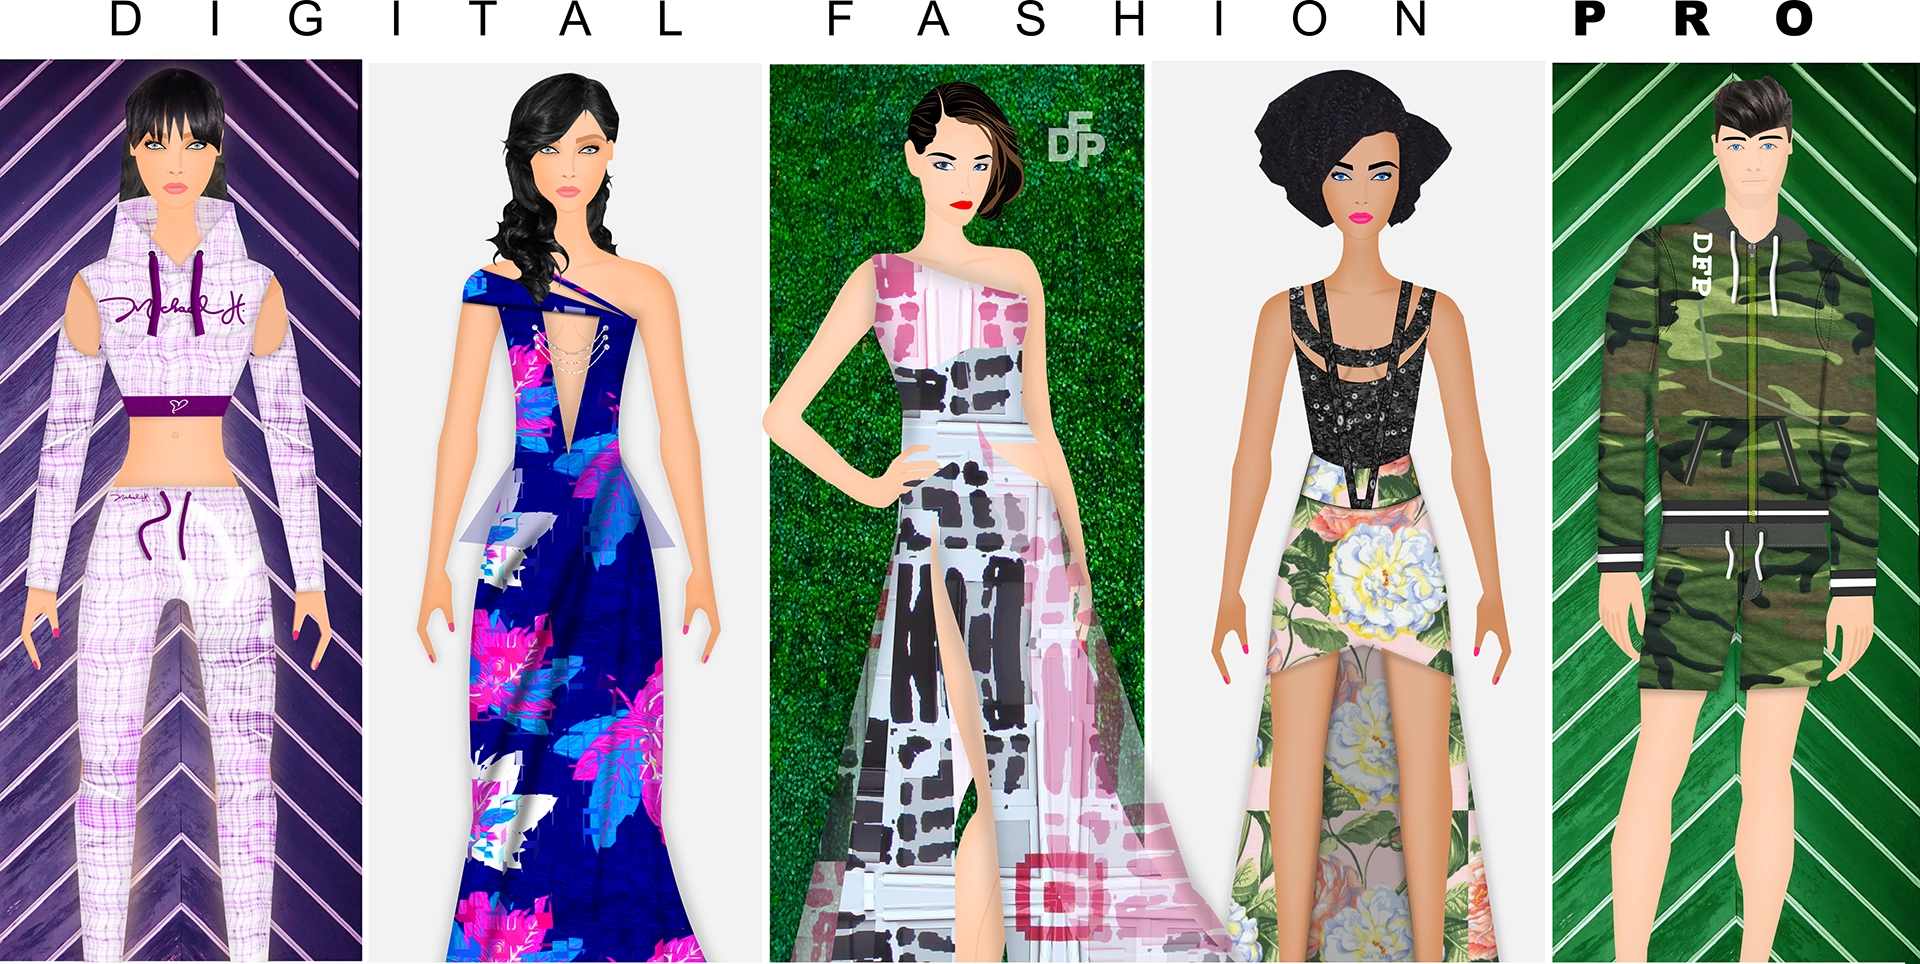 5 DFP Models Display on Backgrounds - fashion design software - Digital Fashion Pro